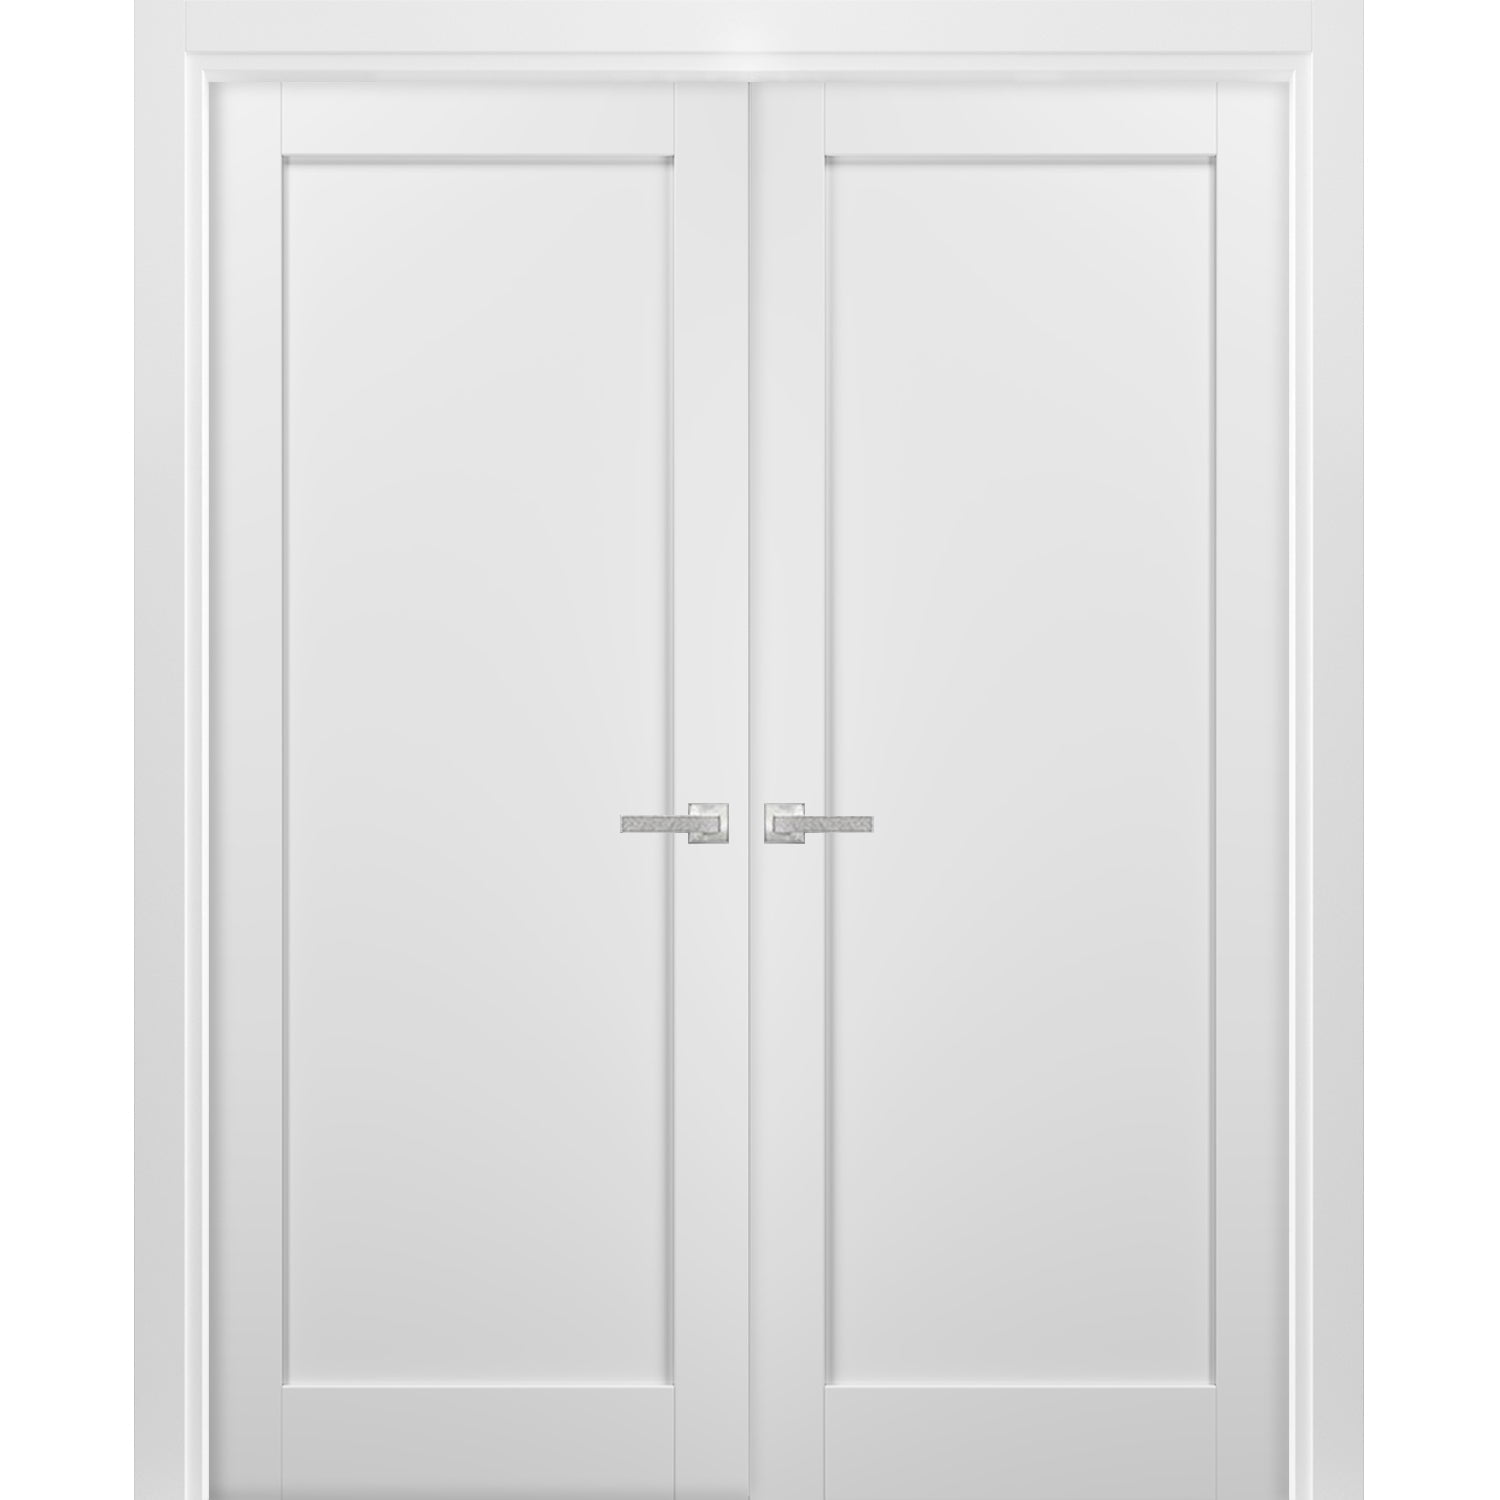 French Double Panel Doors 64 84 with Hardware | Quadro 4111 White Silk | Panel Frame Trims | Bedroom Interior Sturdy Door - Walmart.com